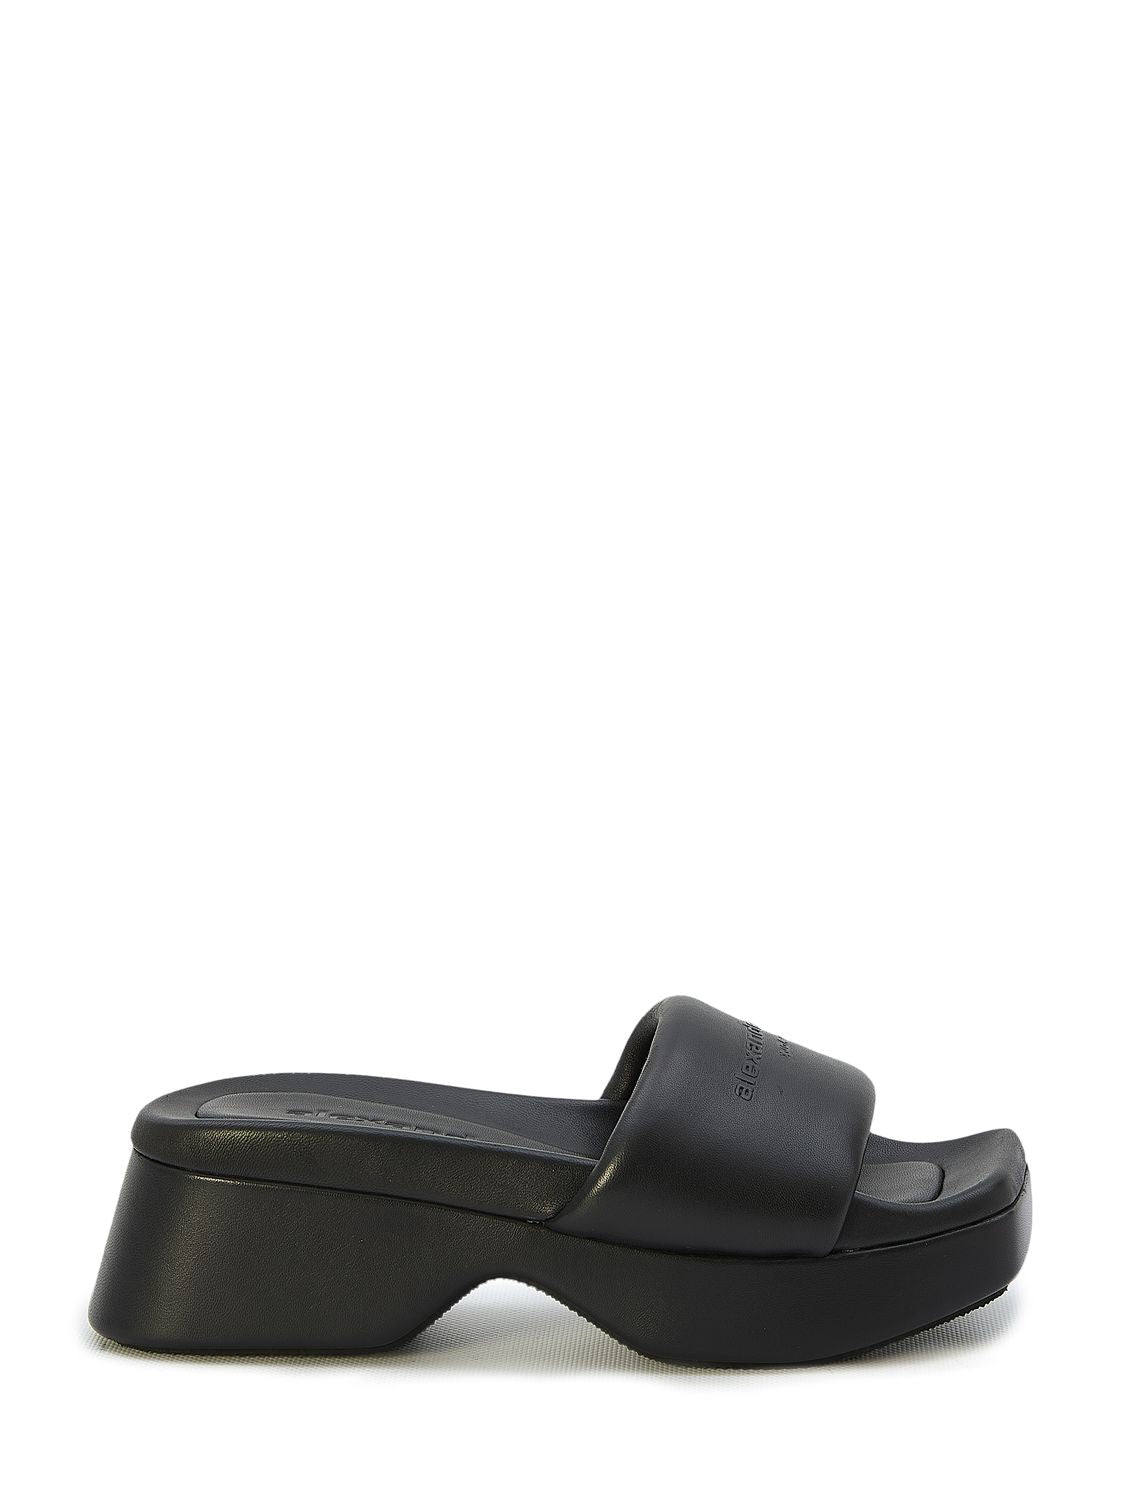 ALEXANDER WANG Sleek Leather Flat Sandals for Women - Black